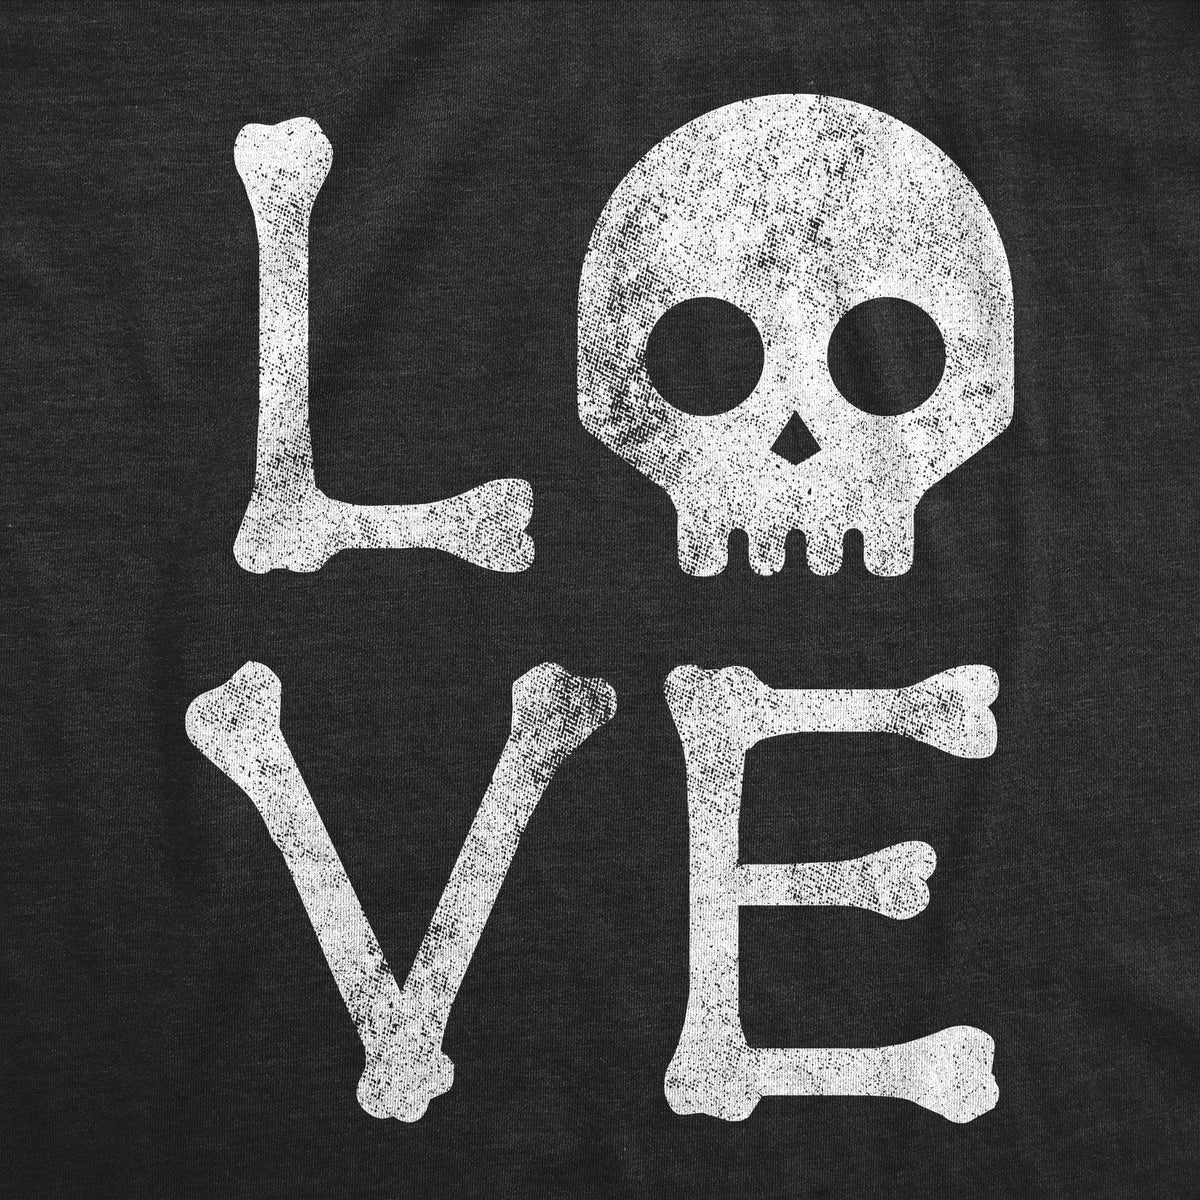 Love Skull Women&#39;s Tshirt - Crazy Dog T-Shirts